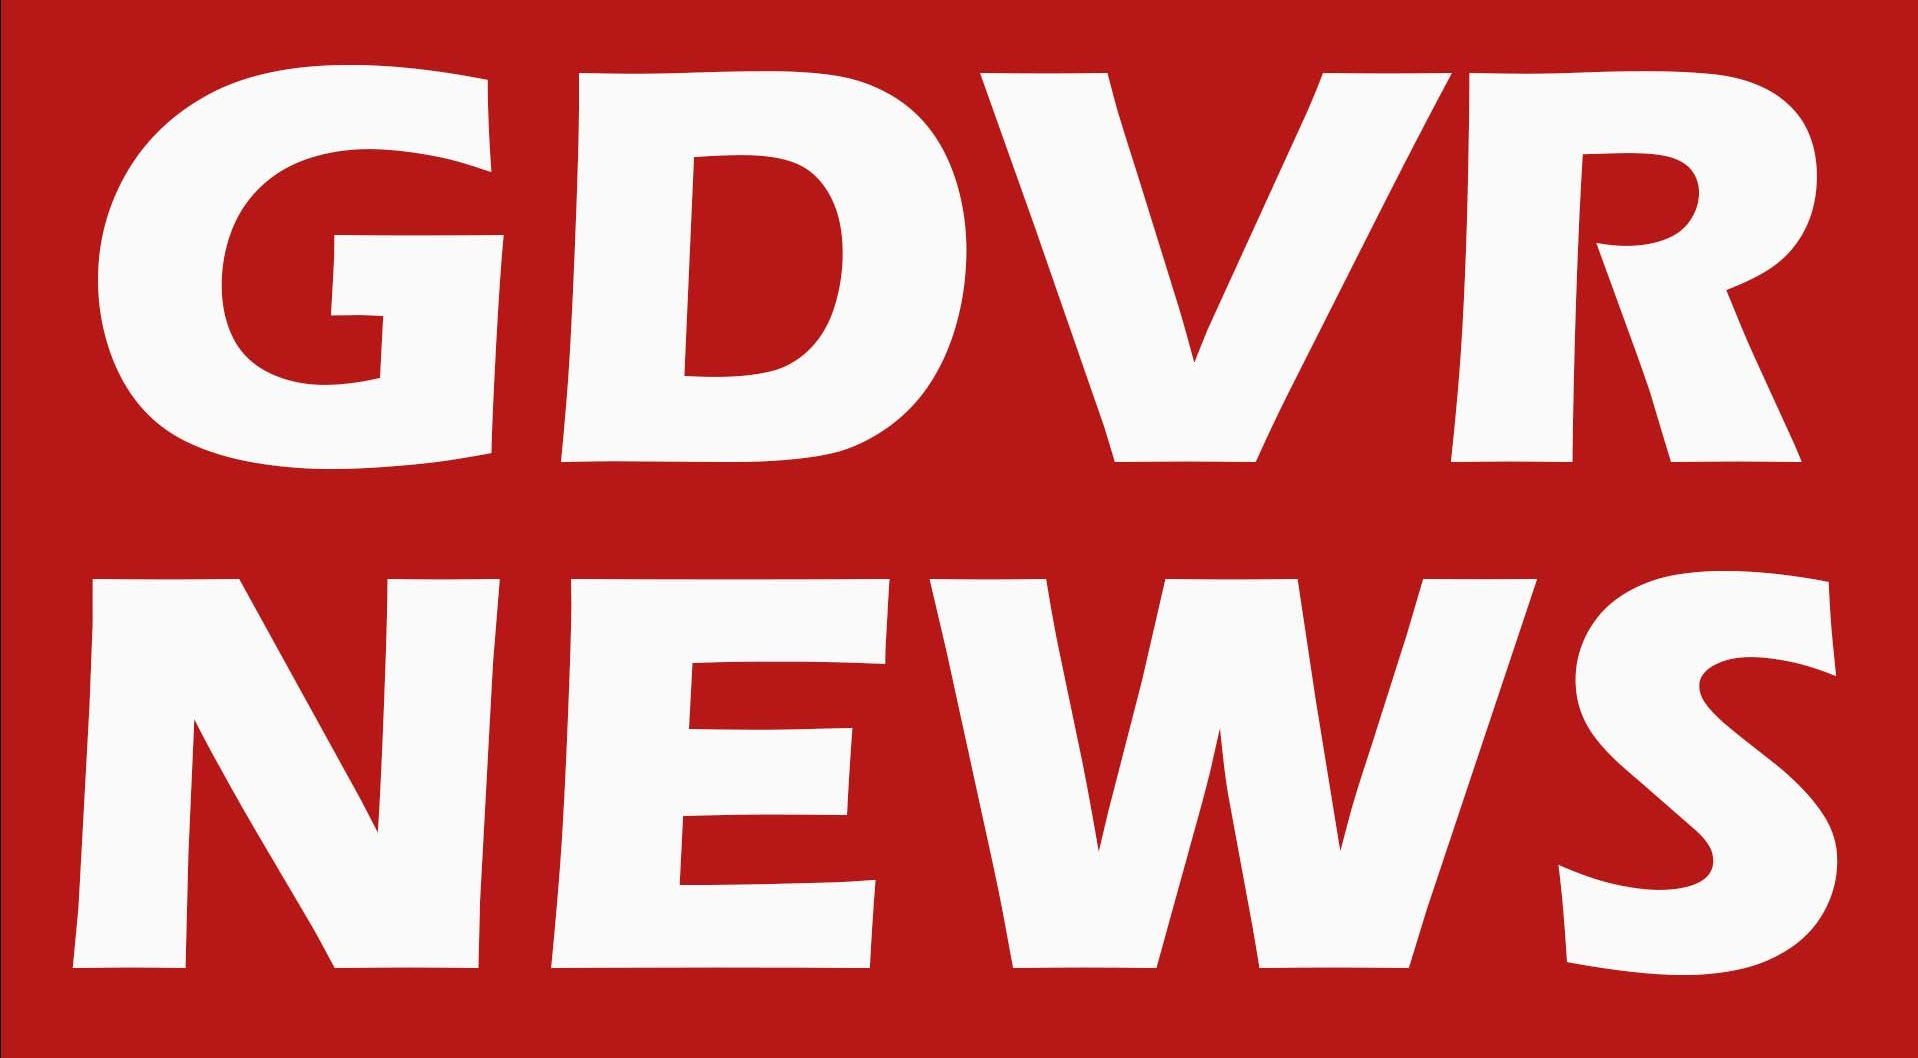 GDVR NEWS